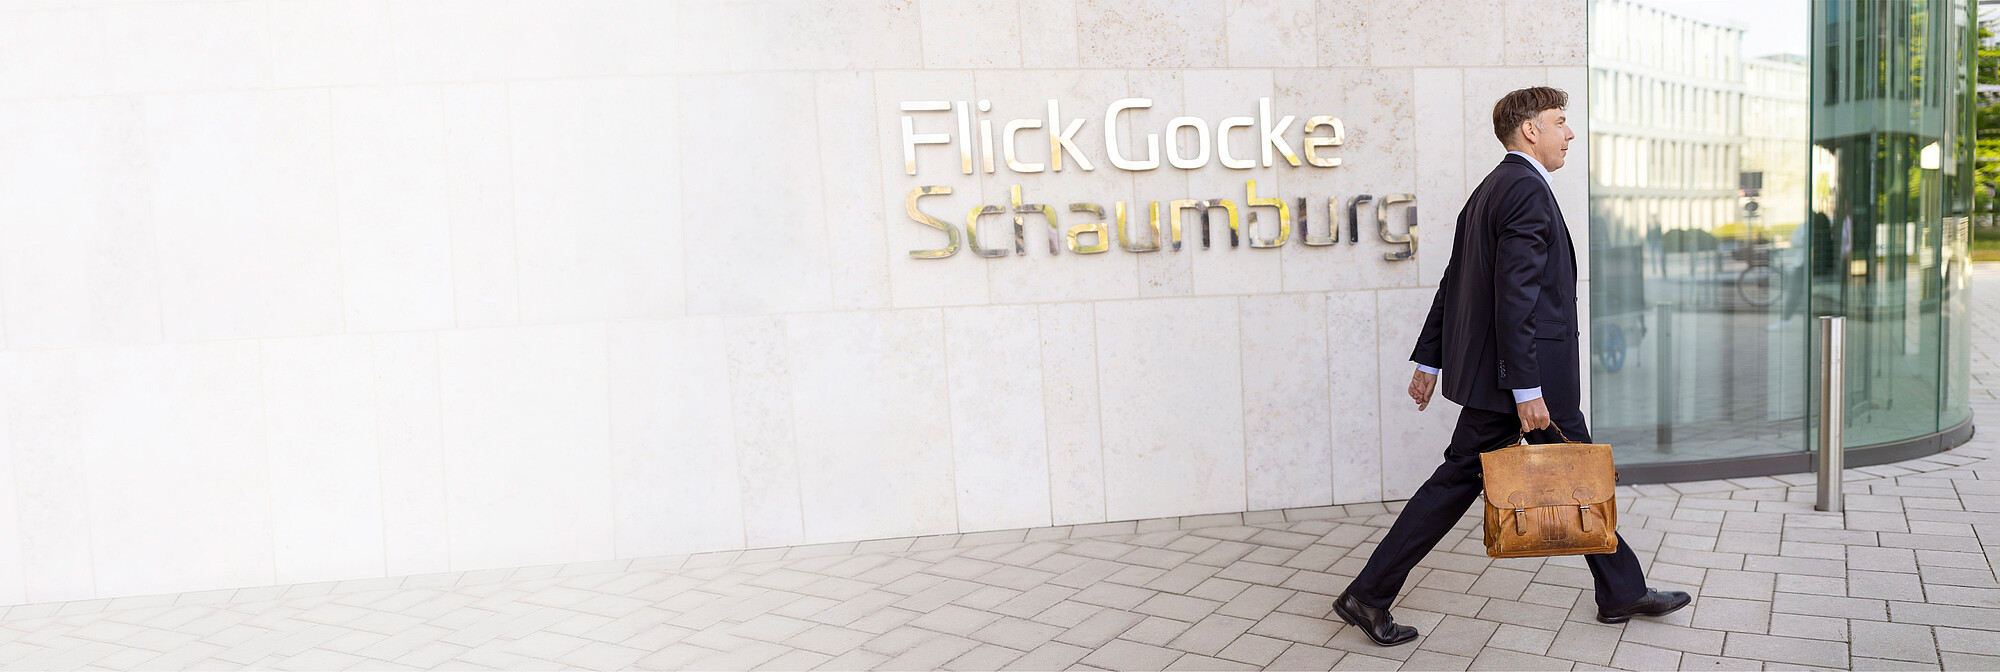 Mann geht an Eingang mit Flick-Gocke-Schaumburg-Logo vorbei